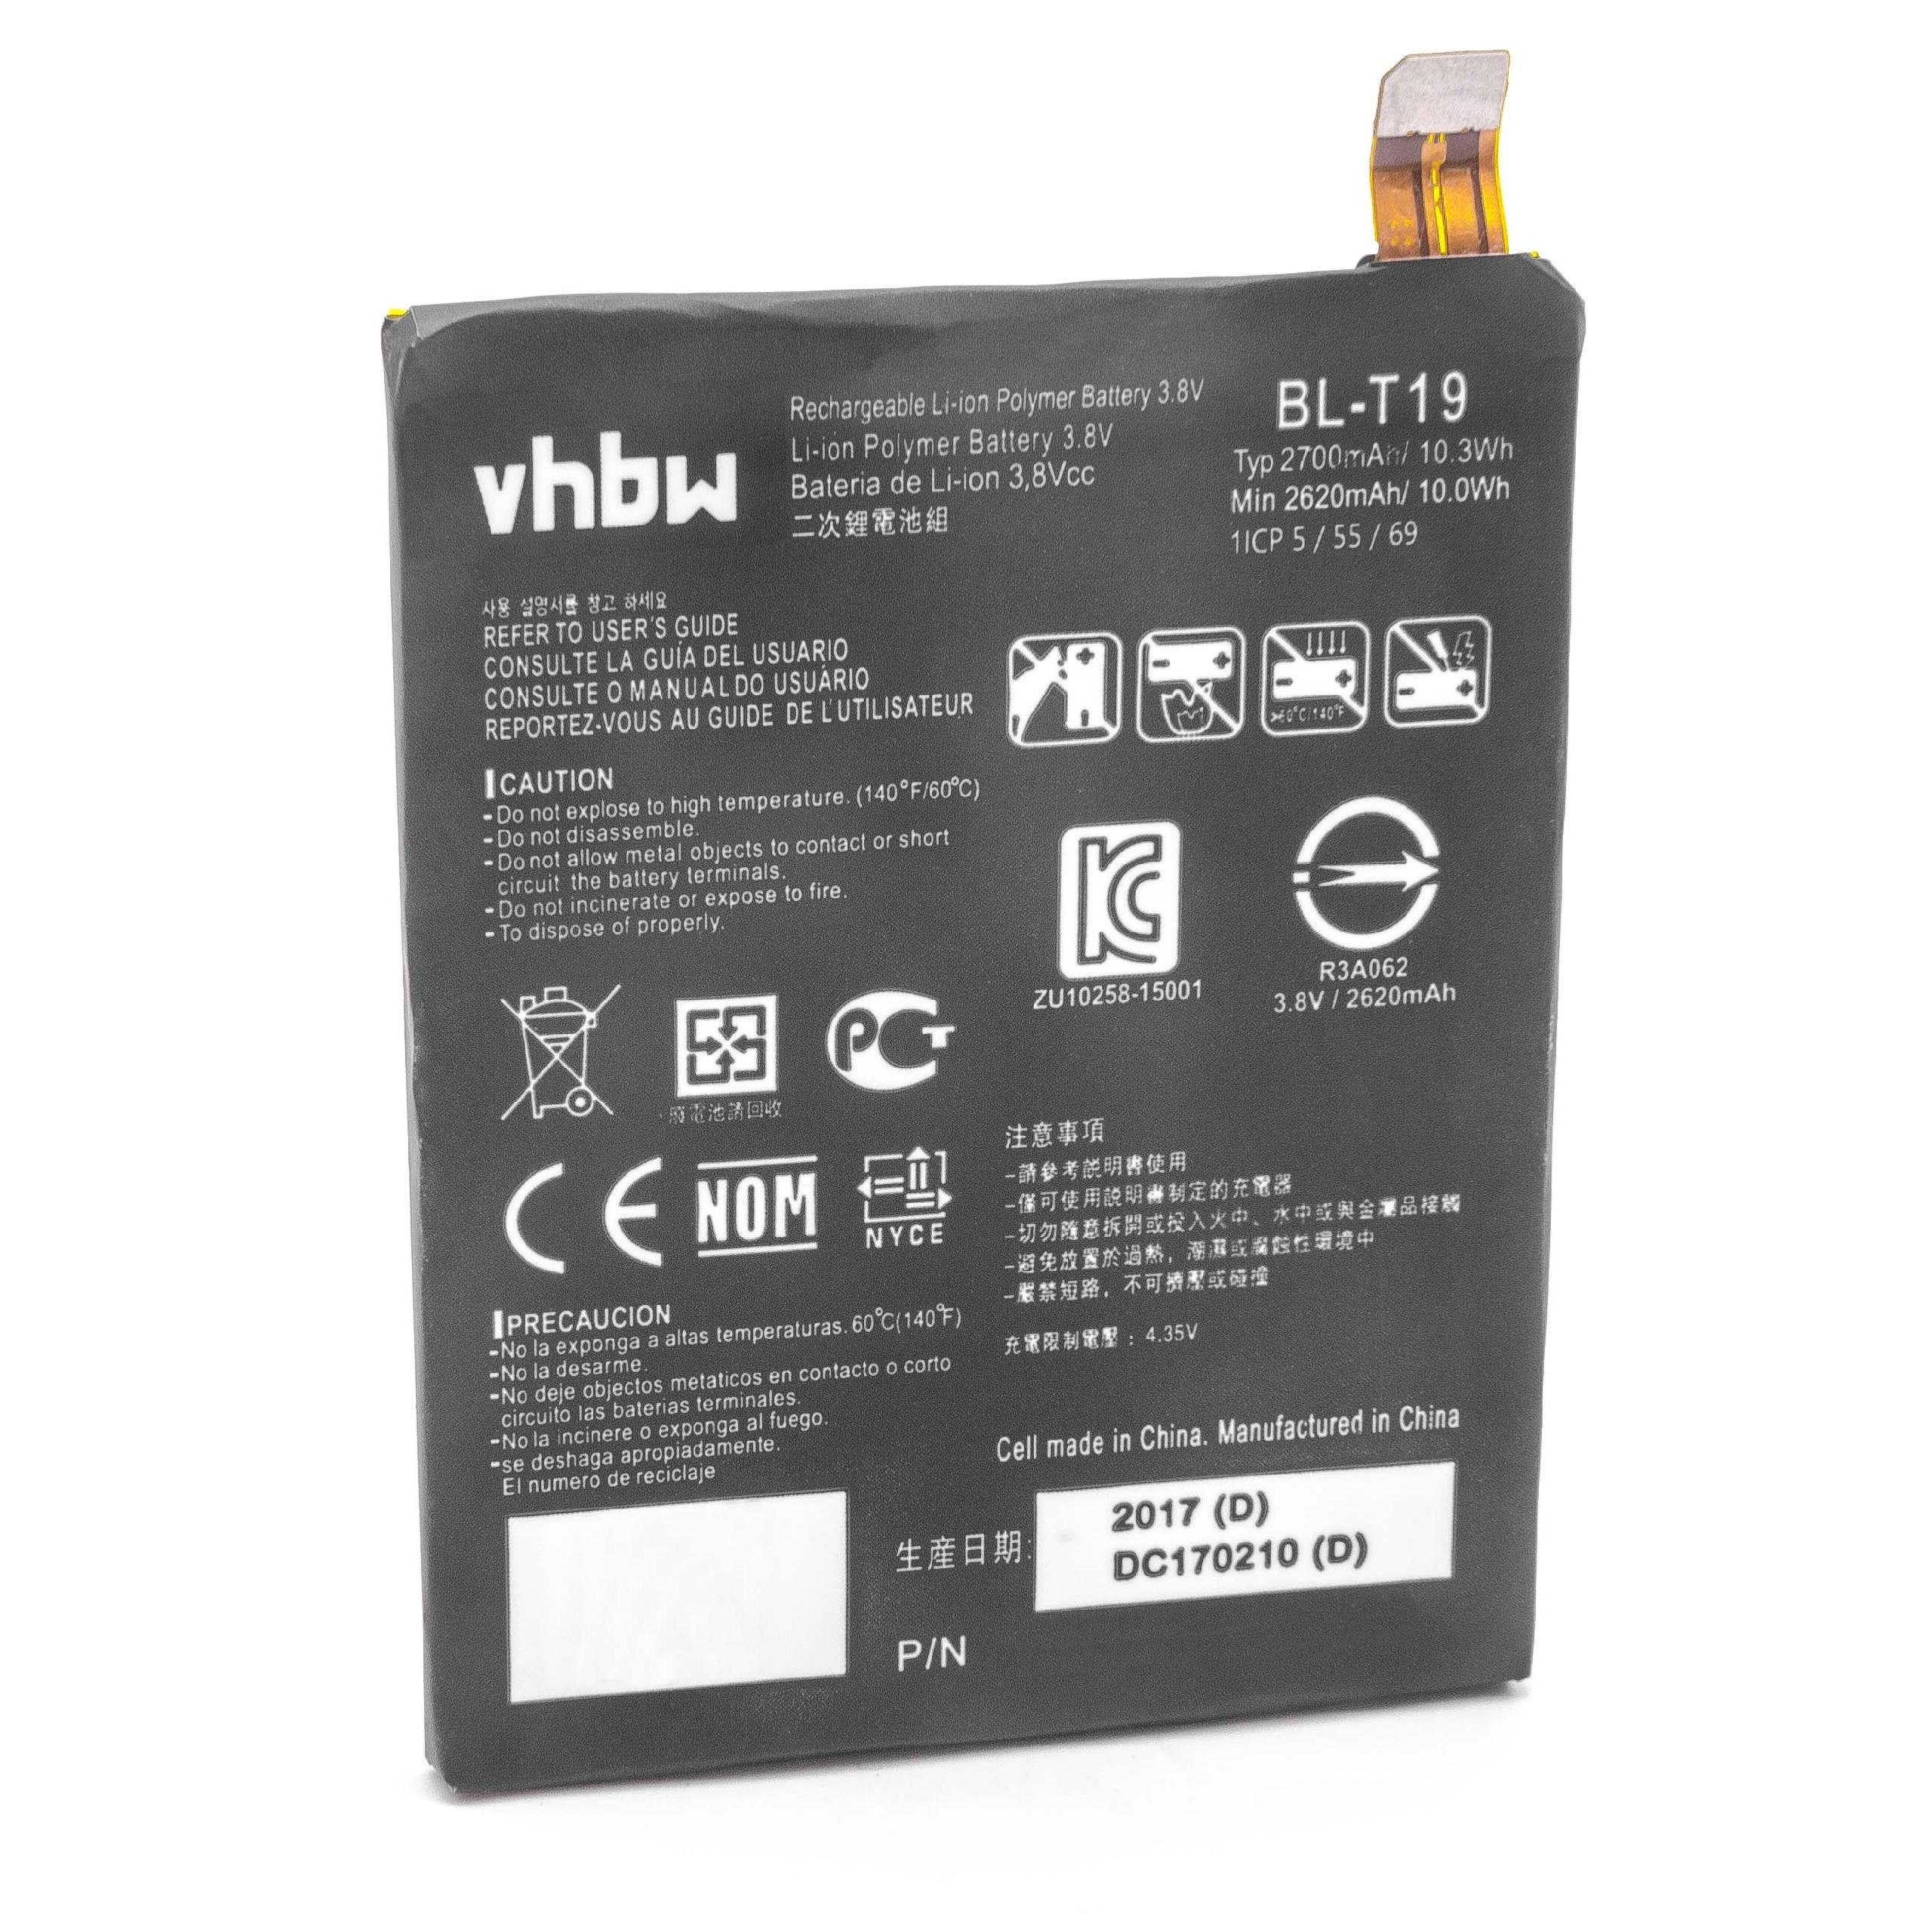 vhbw kompatibel mit LG Bullhead, H791, H791F, H790, H798 Smartphone-Akku Li-Polymer 2600 mAh (3,8 V) | Akkus und PowerBanks